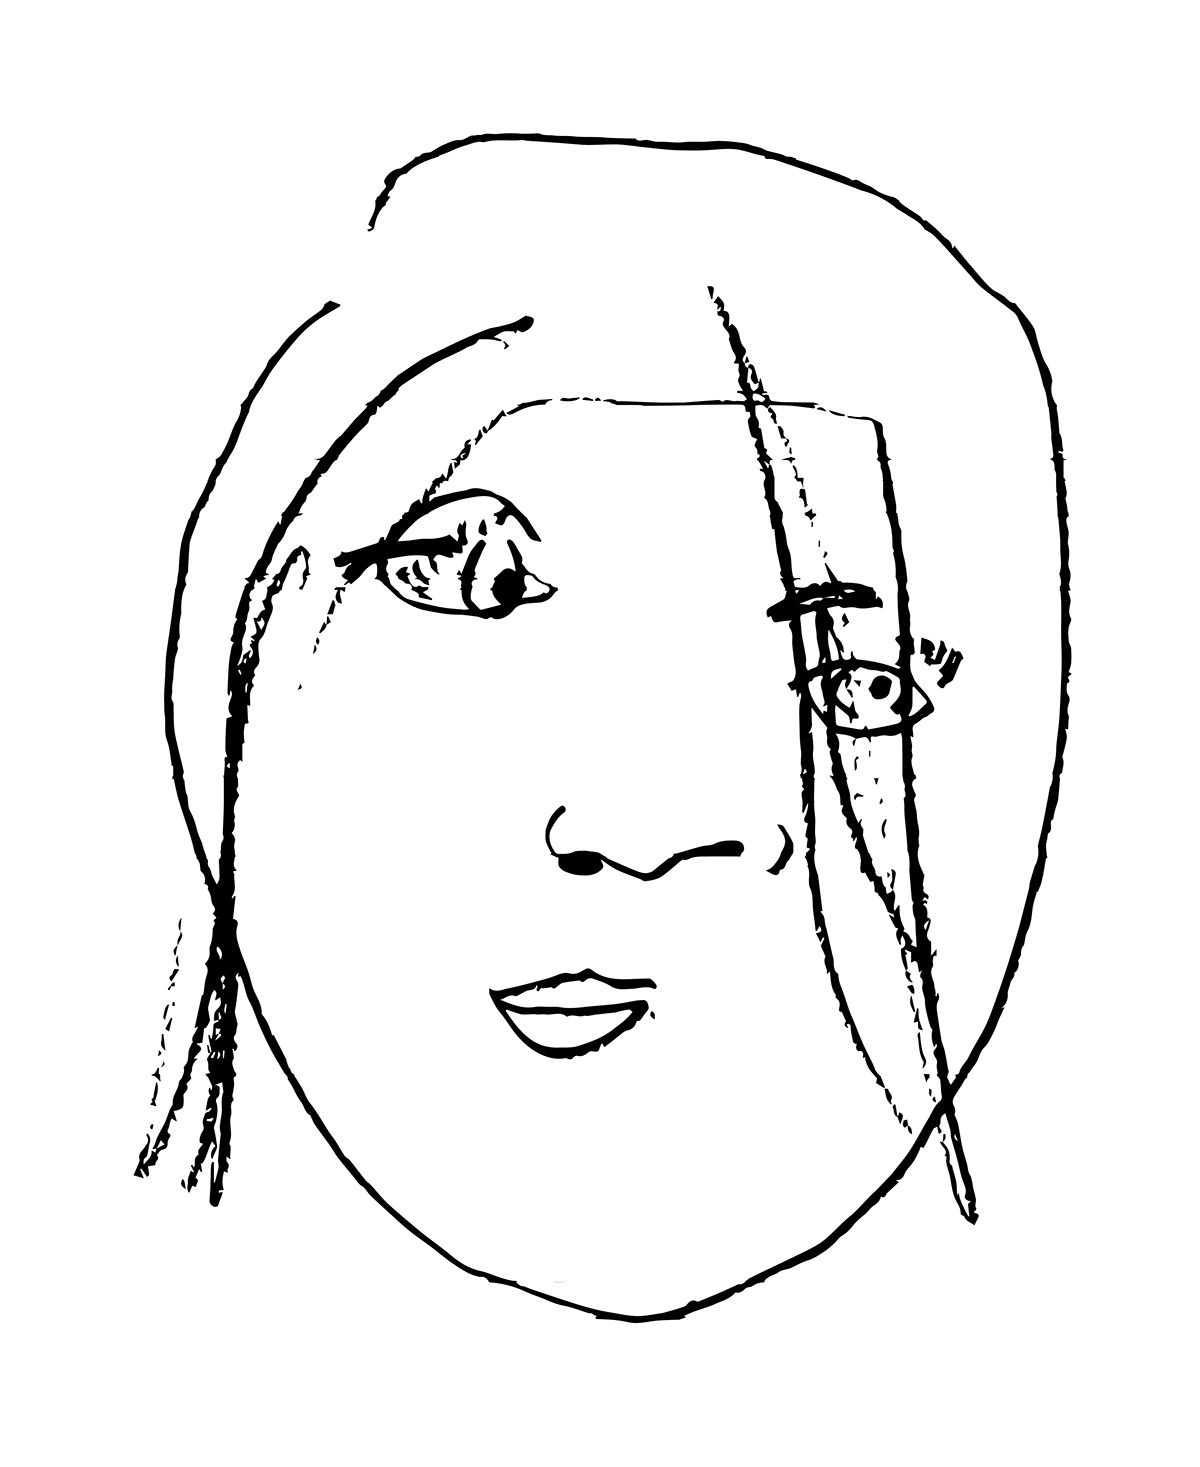 blind drawing self portrait Pencil drawing school